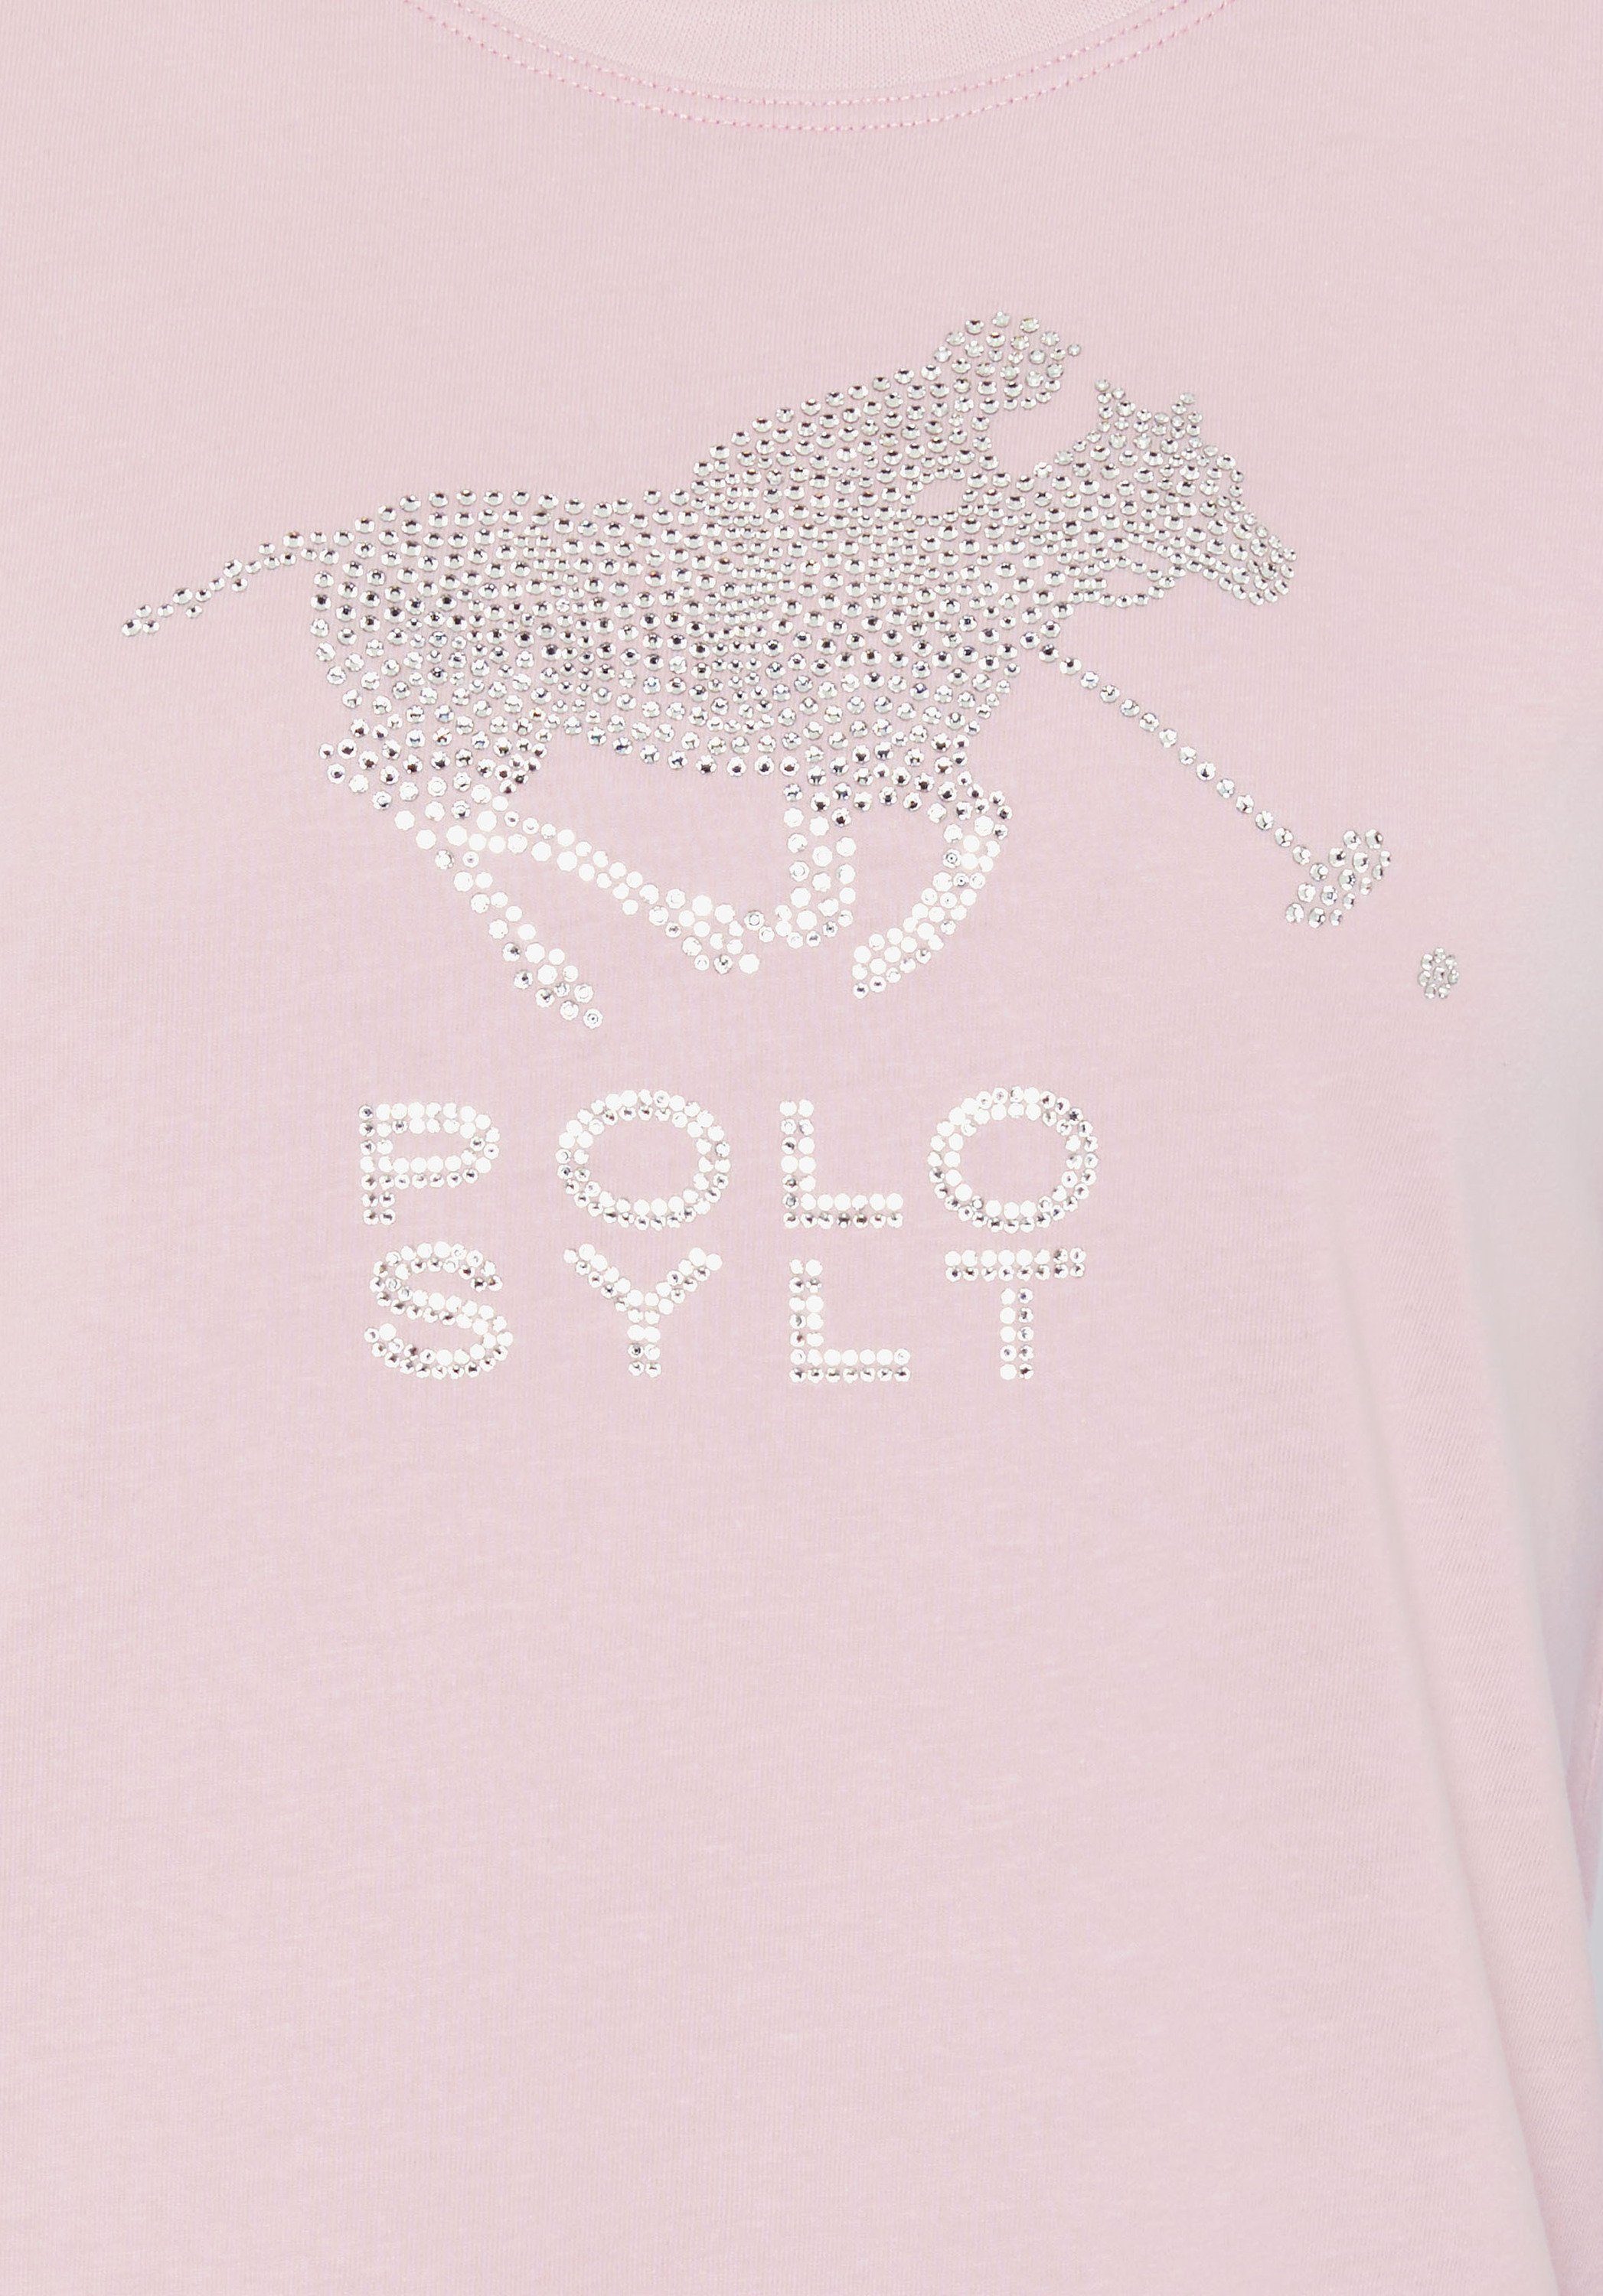 Polo mit Strasssteinen Pink edlen 13-2806 T-Shirt Lady Sylt